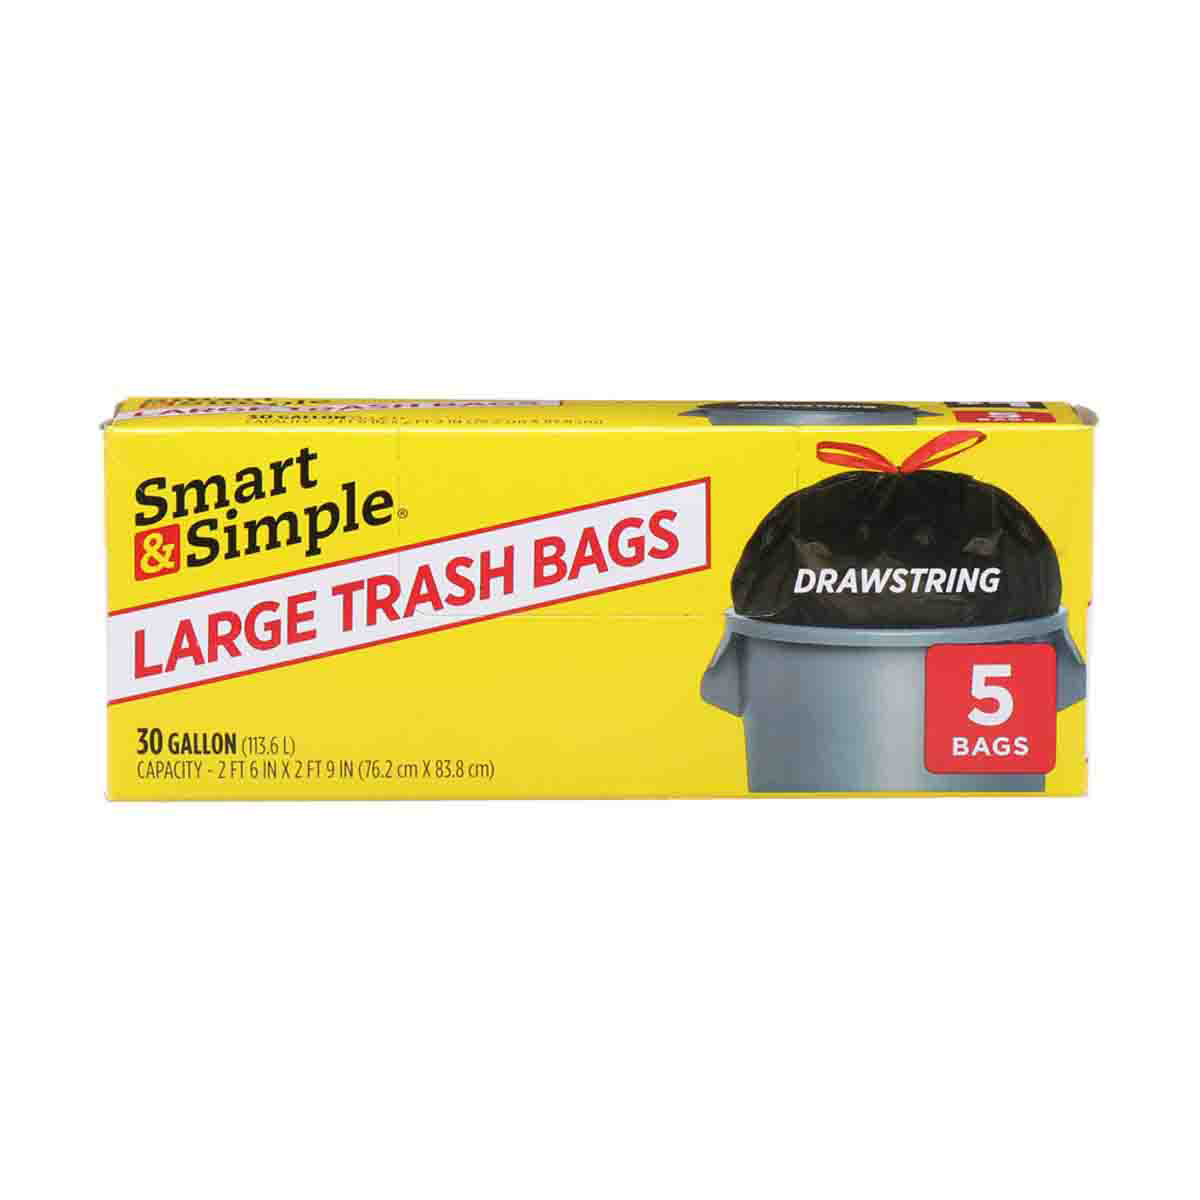 Basic Large Trash Bags, 30 Gallon, 5 Bags (Drawstring) 